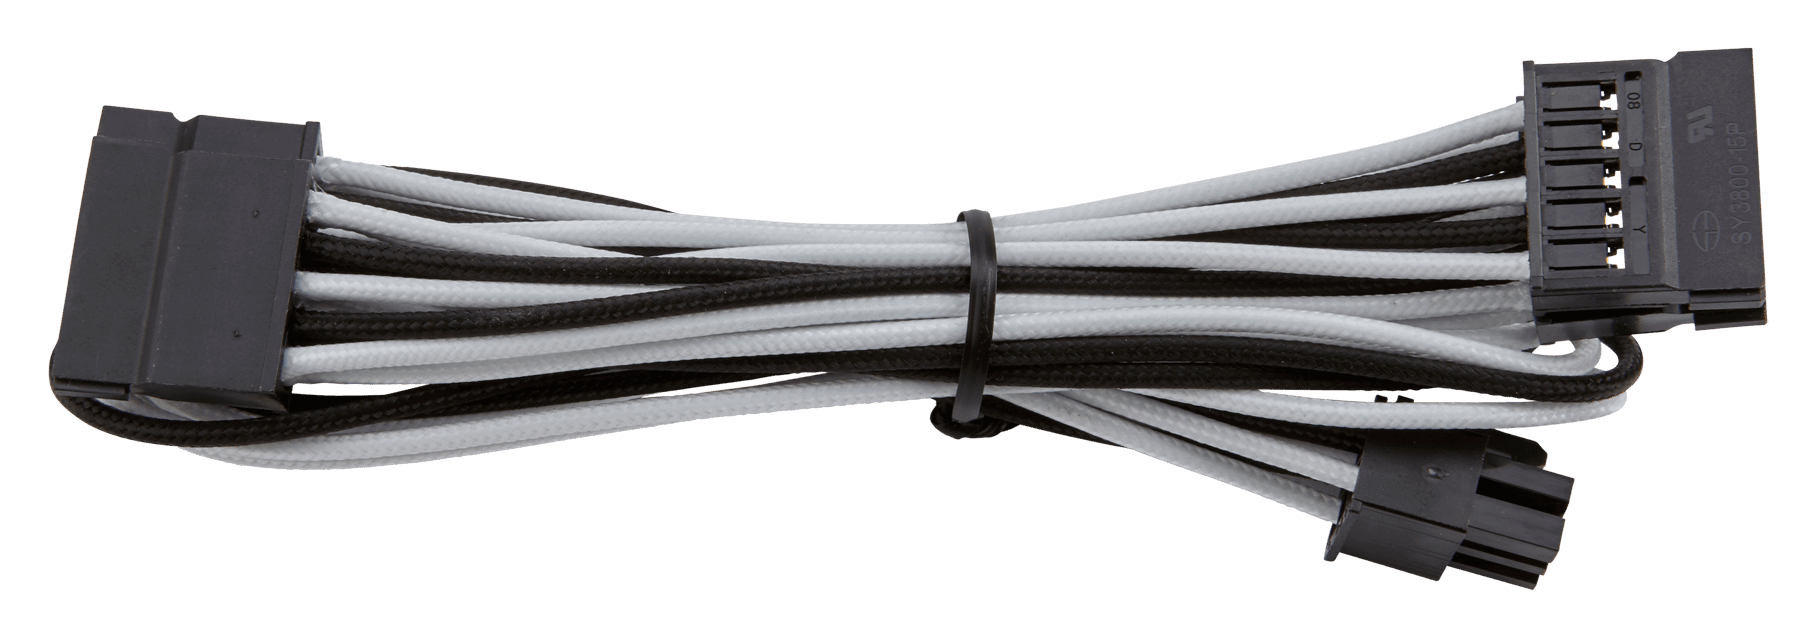 Ru side Fordøjelsesorgan Premium Individually Sleeved SATA Cable, Type 4 (Generation 3) - White/Black